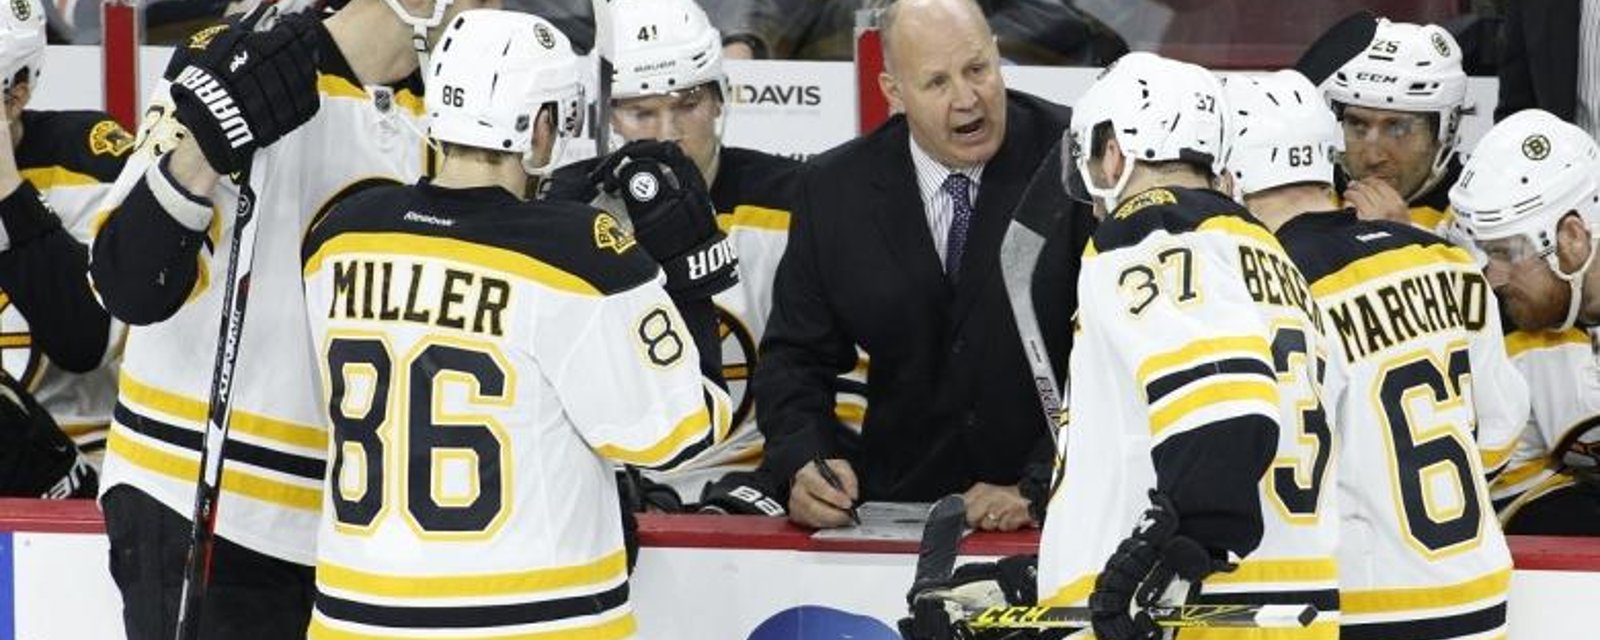 Player agent calls out Bruins head coach Claude Julien.